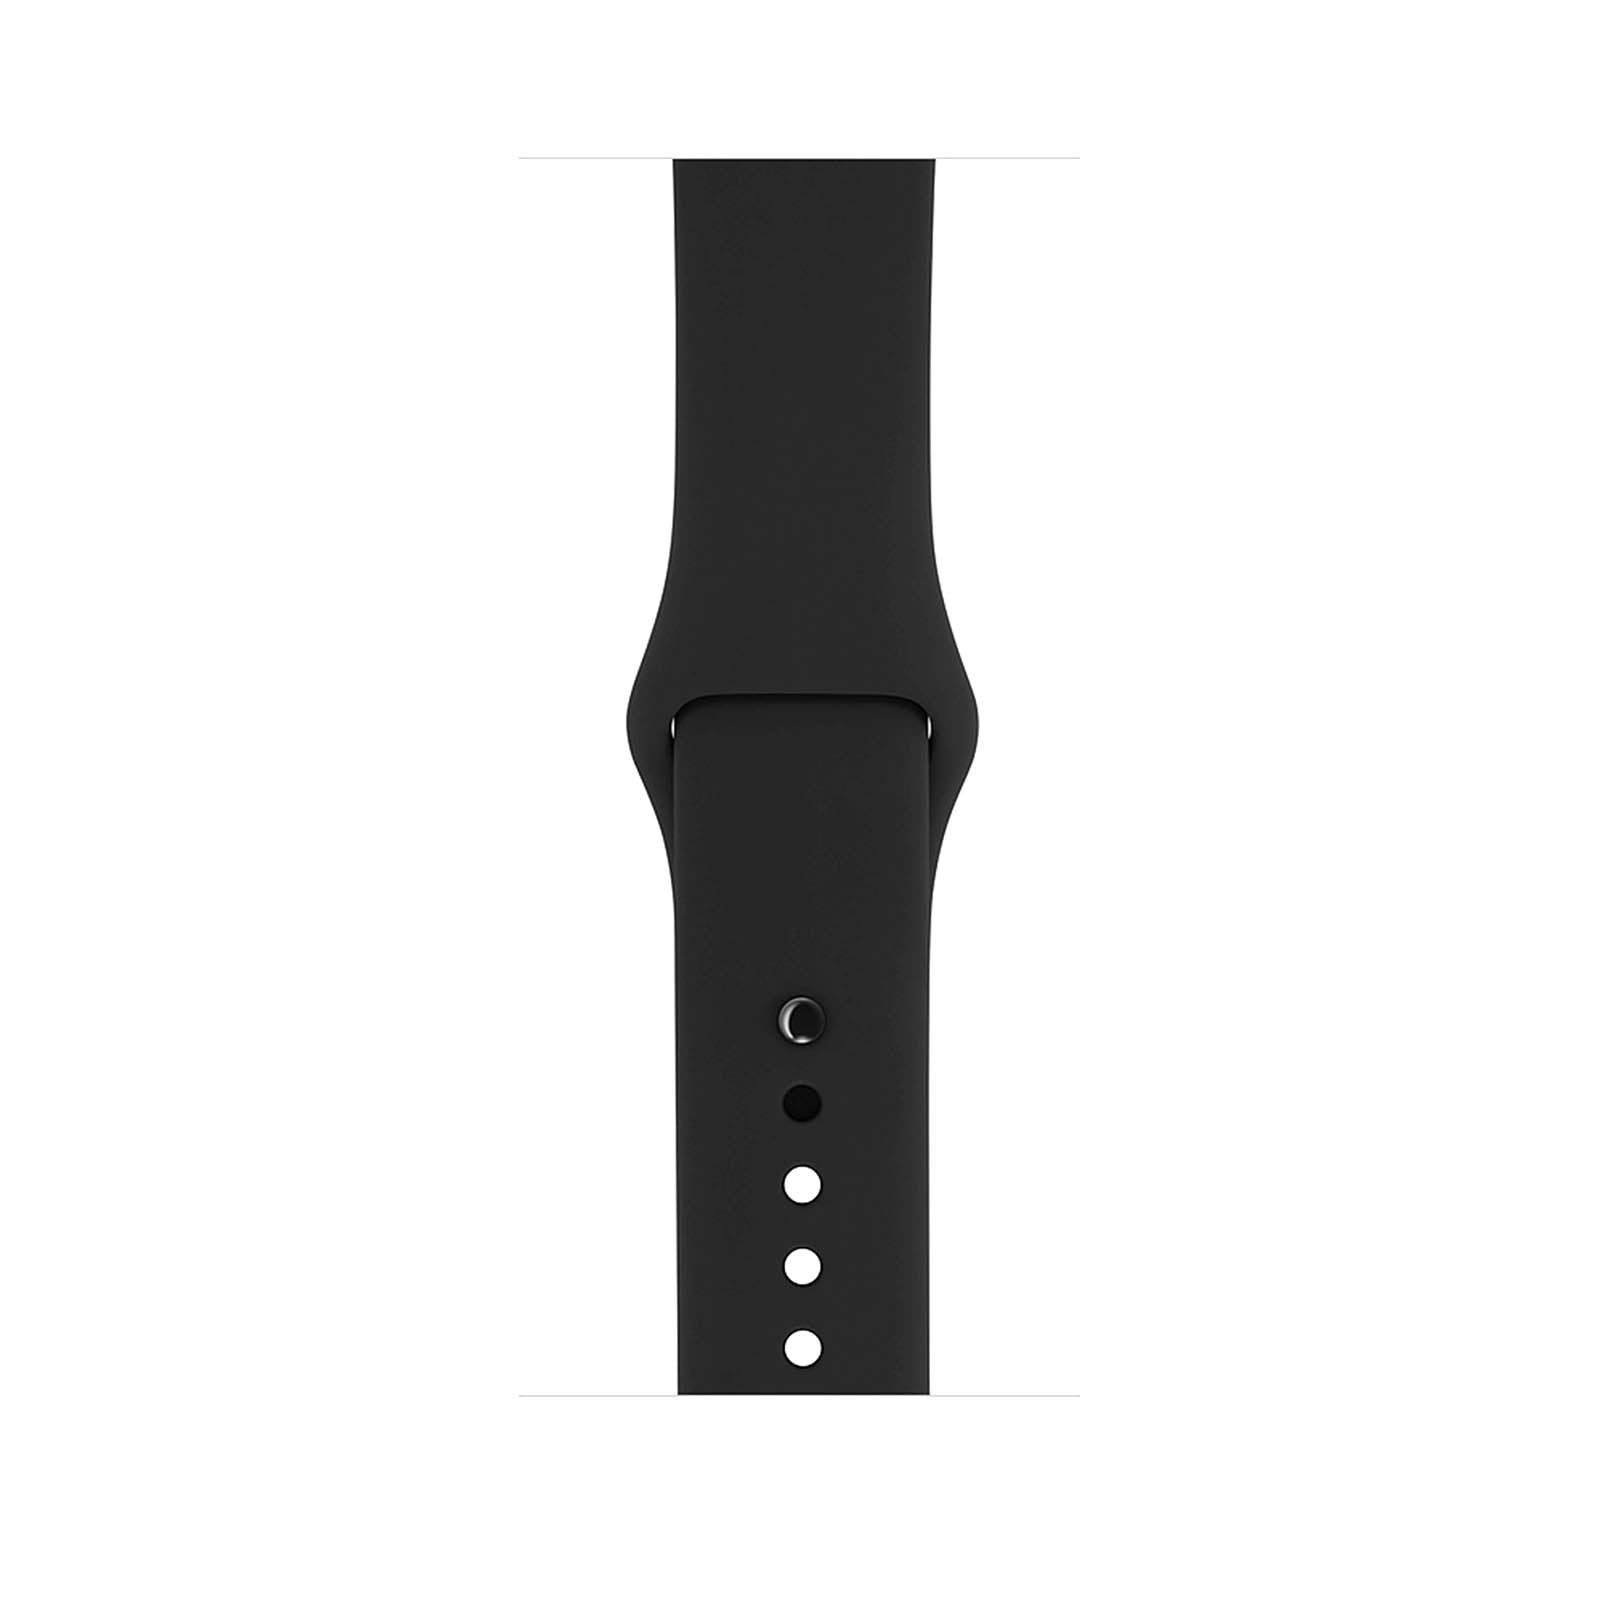 Apple Watch Series 5 Stainless 40mm Black Pristine - WiFi